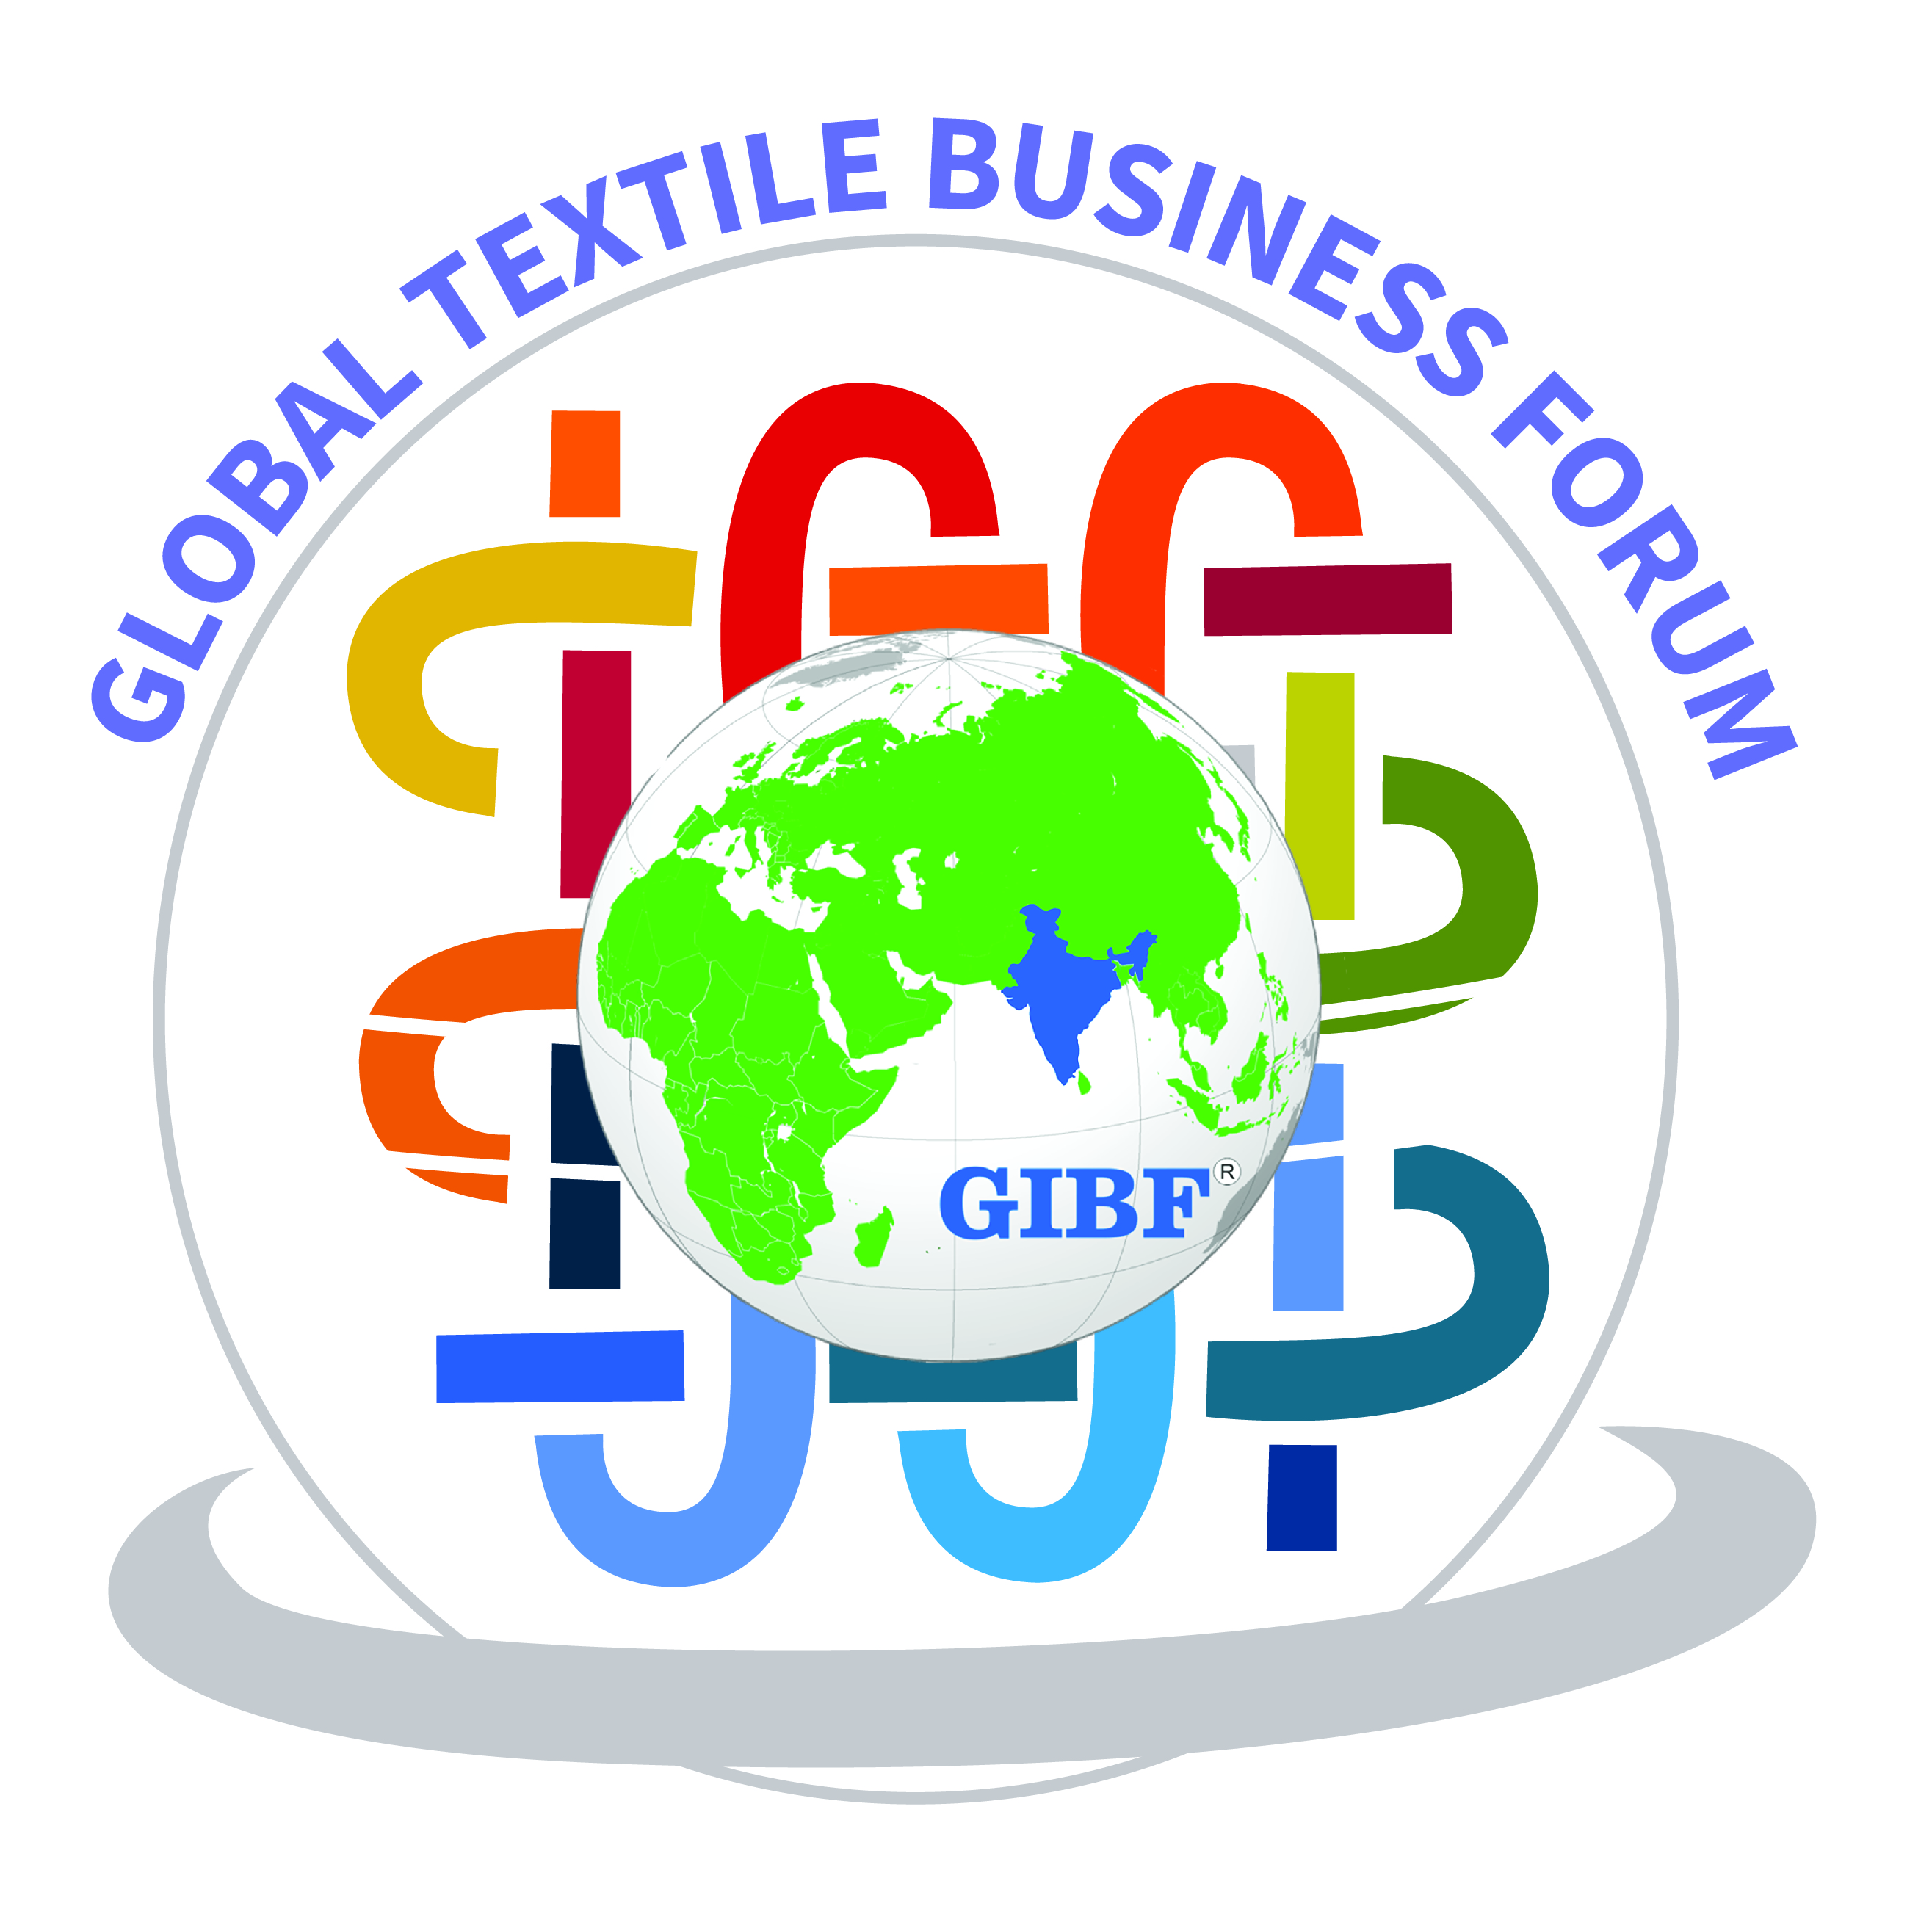 Global Textile Business Forum logo